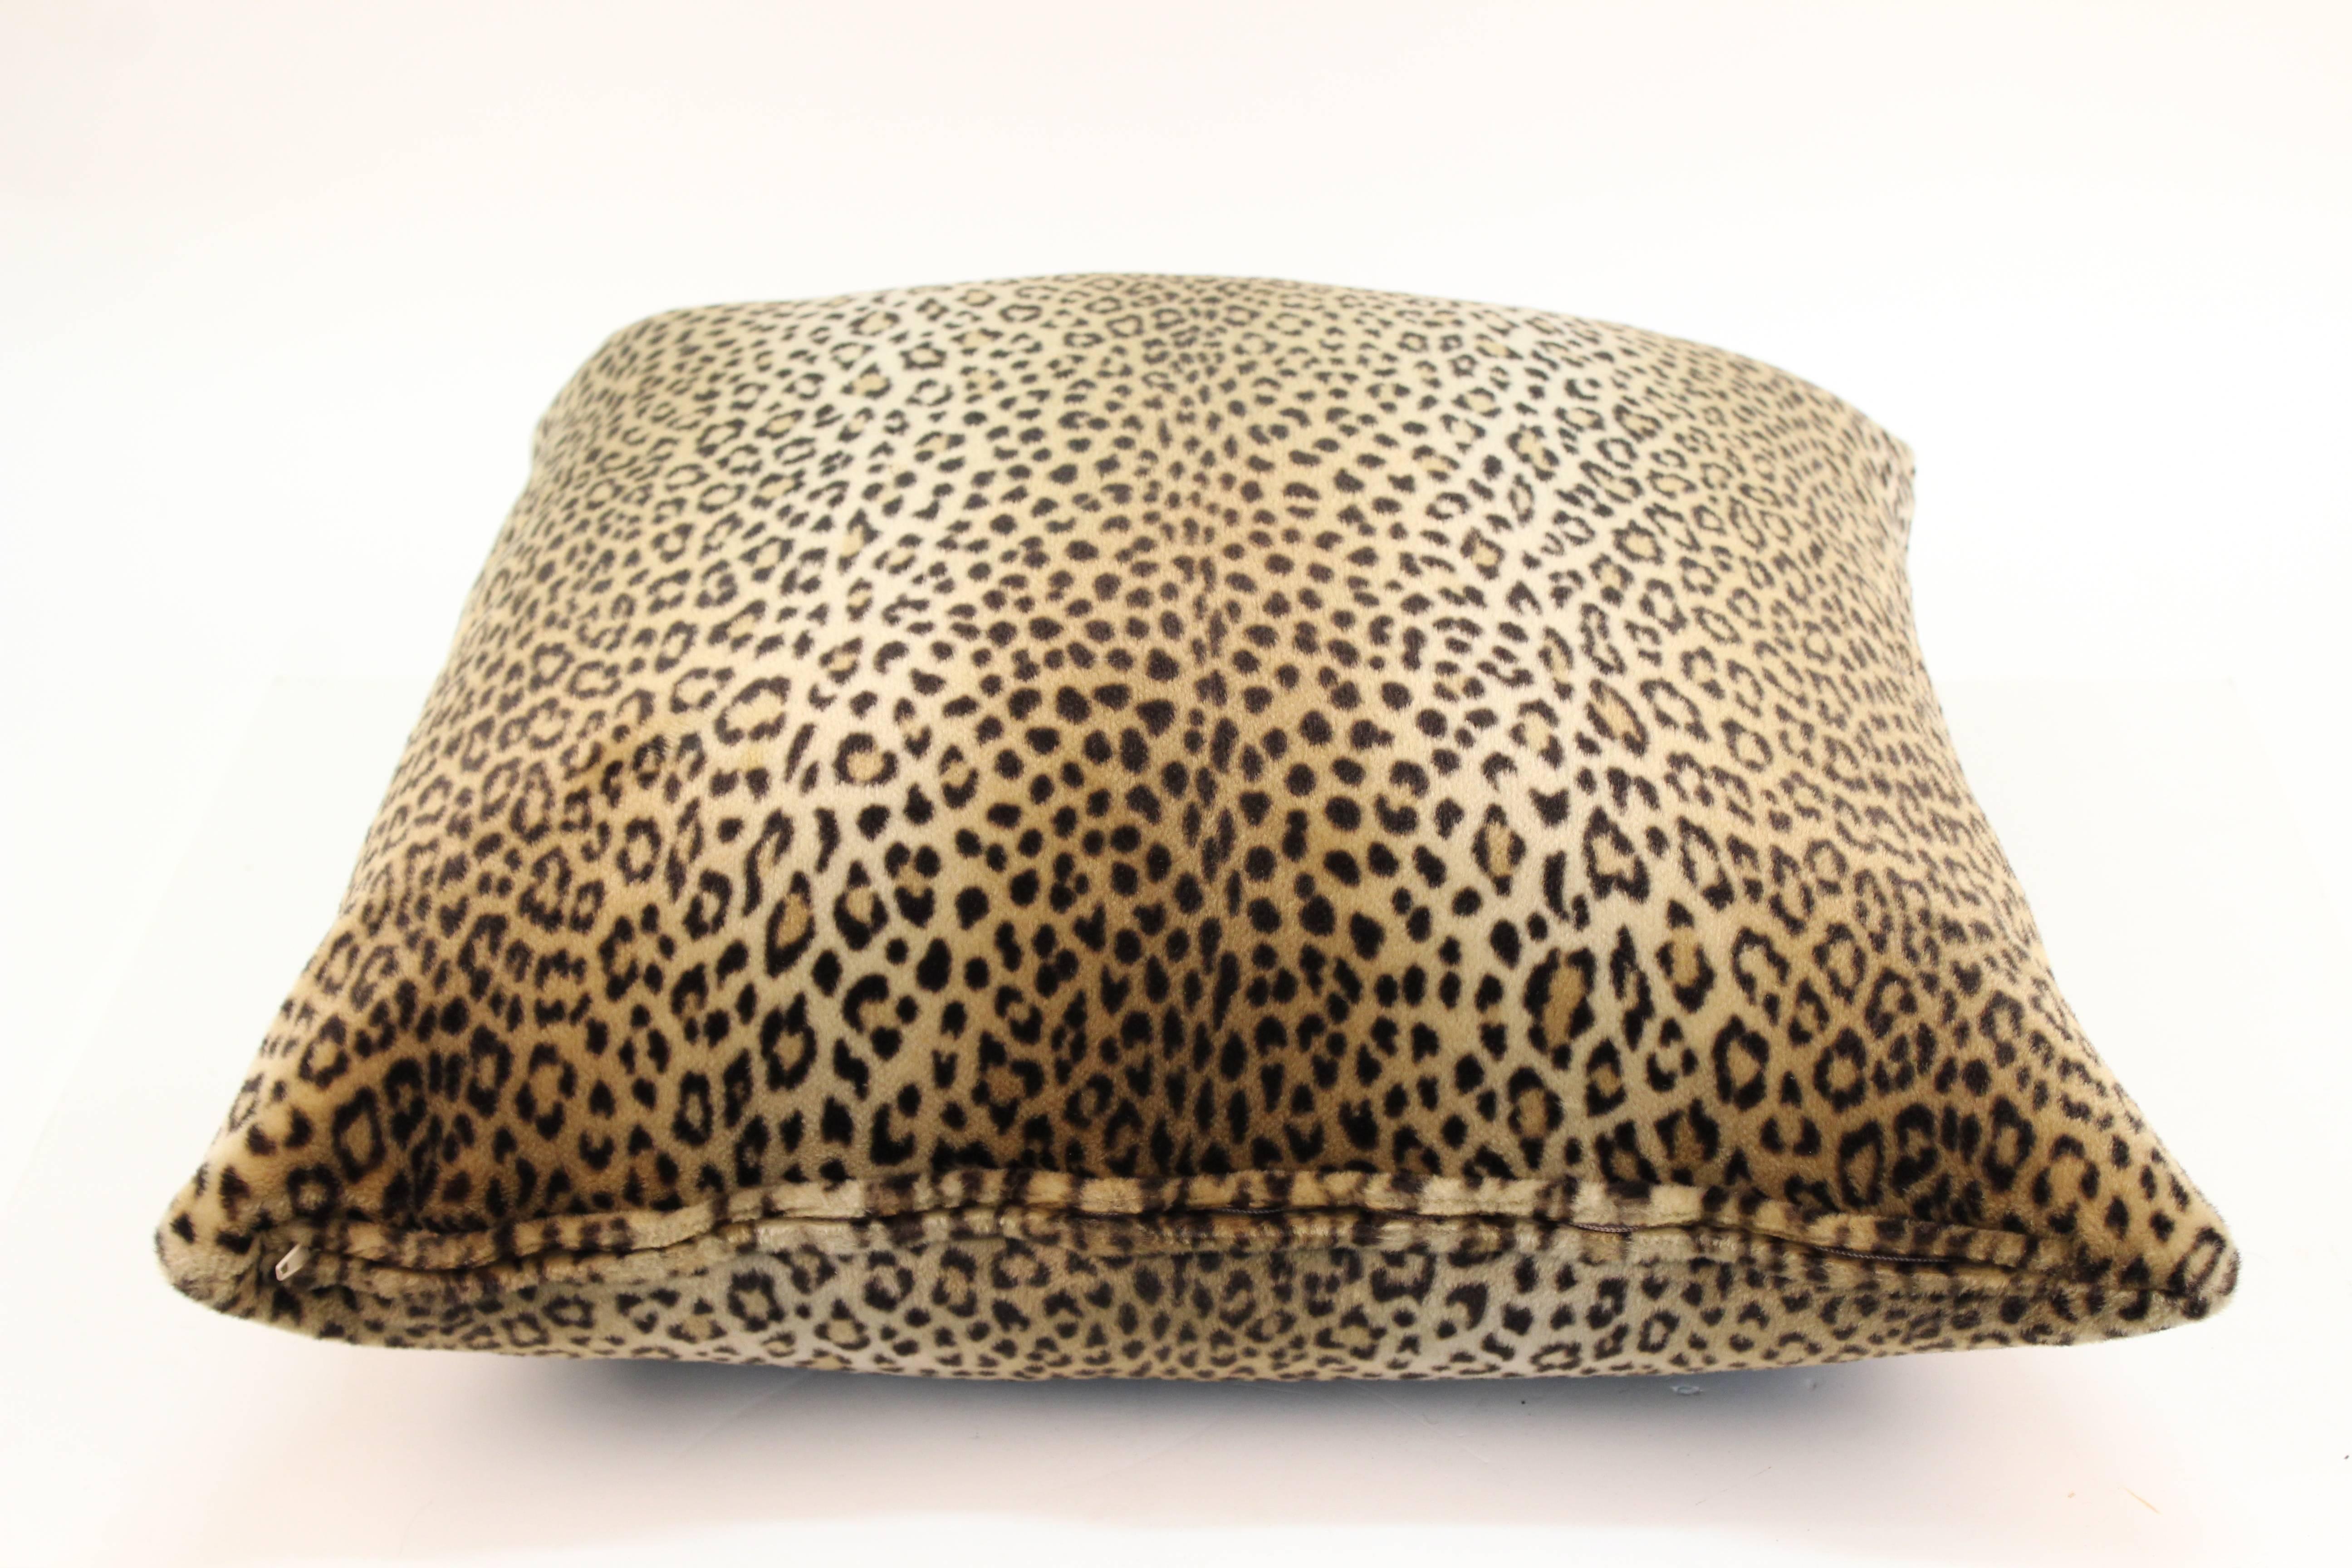 Unknown Four Leopard Print Pillows